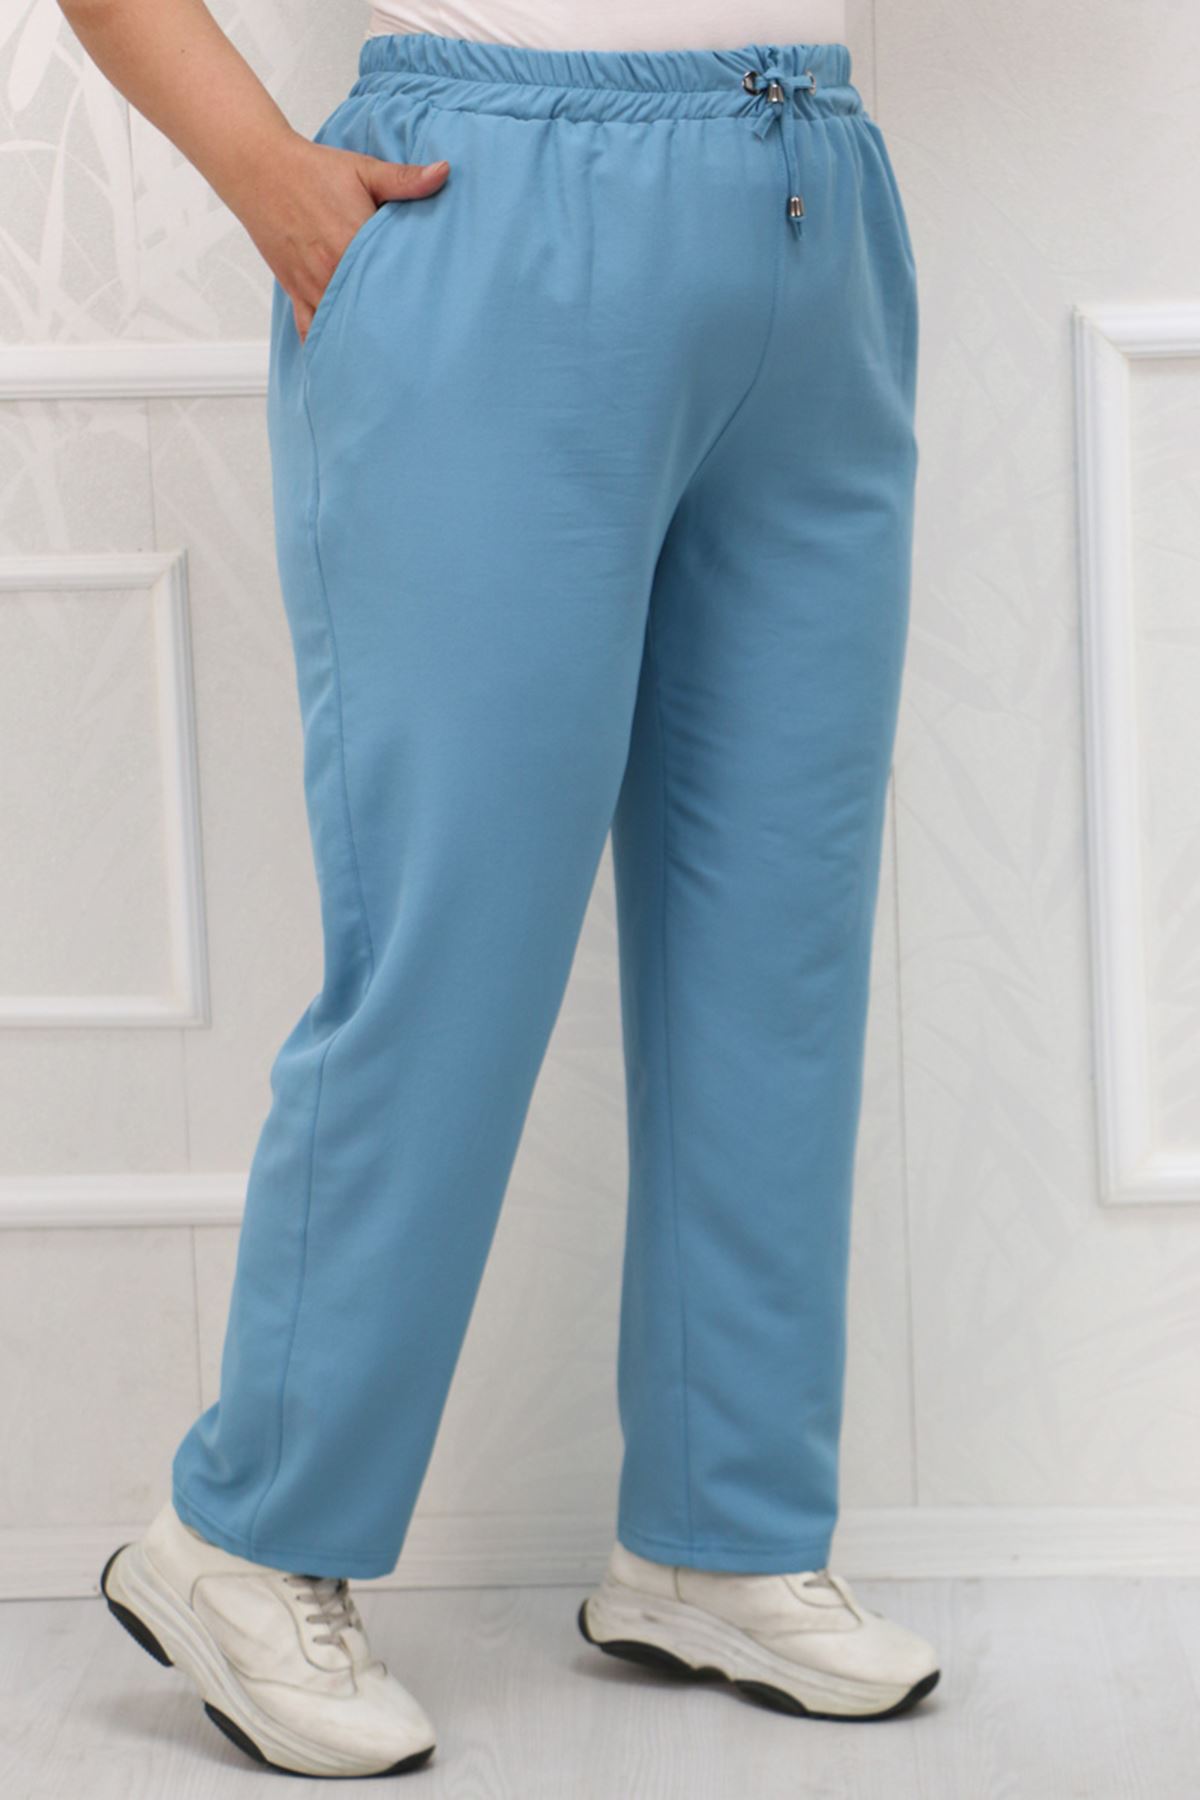 39024 Large Size Star Airobin Slim Leg Pants With Elastic Waist -Baby Blue